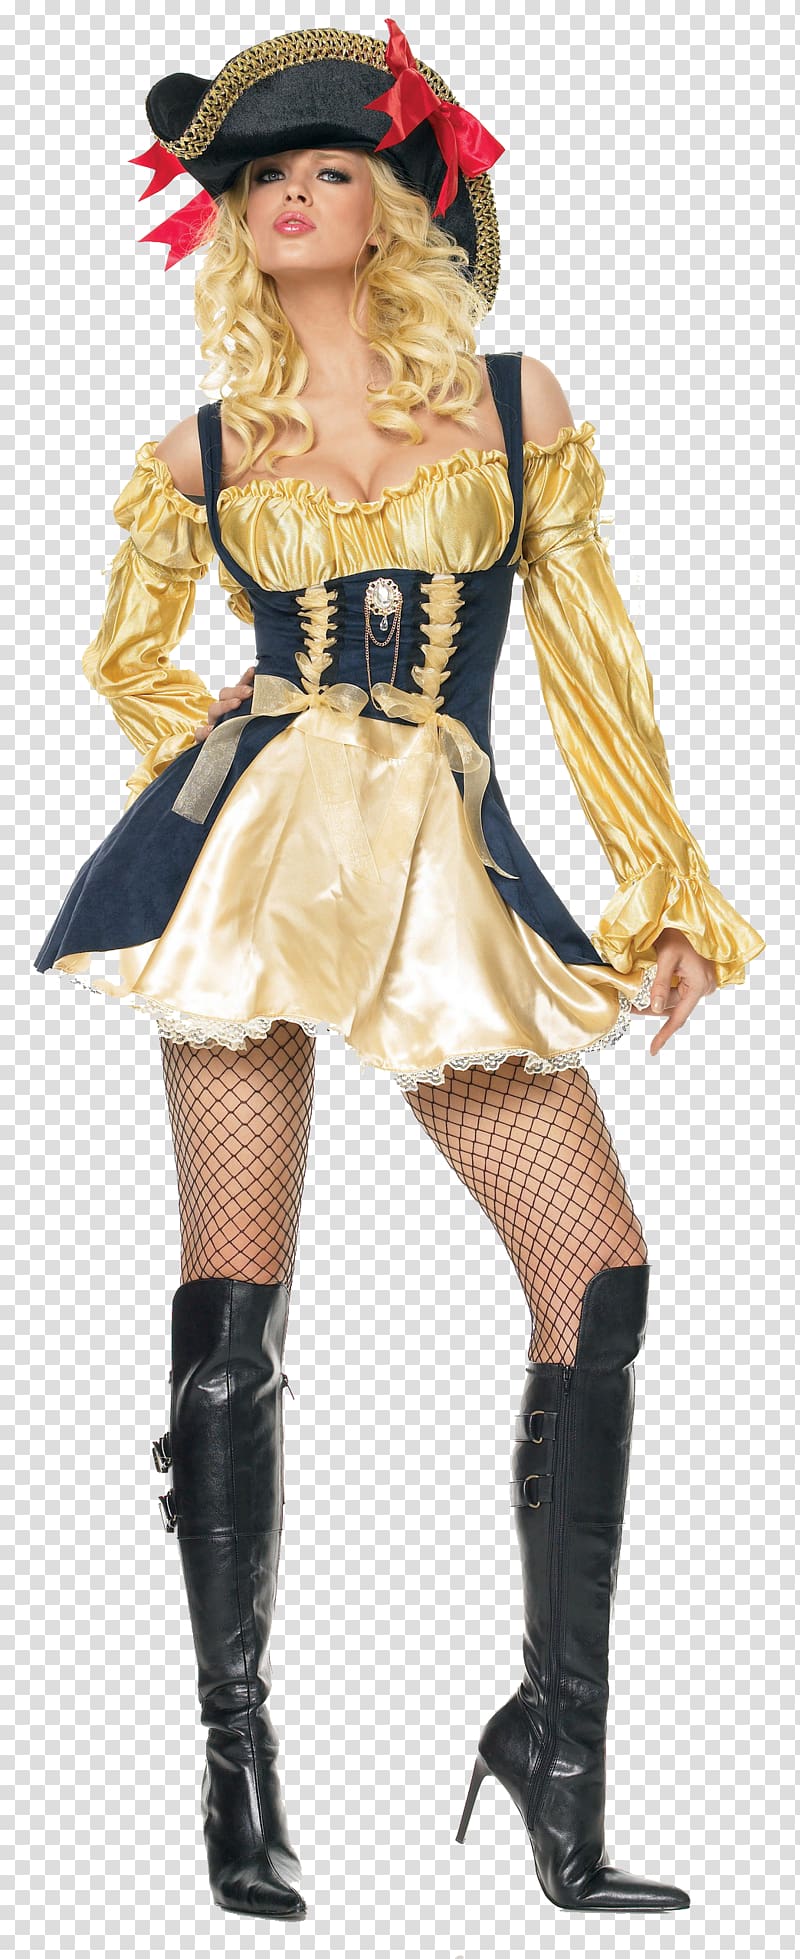 Woman wearing pirate costume, Jack Sparrow Halloween costume.